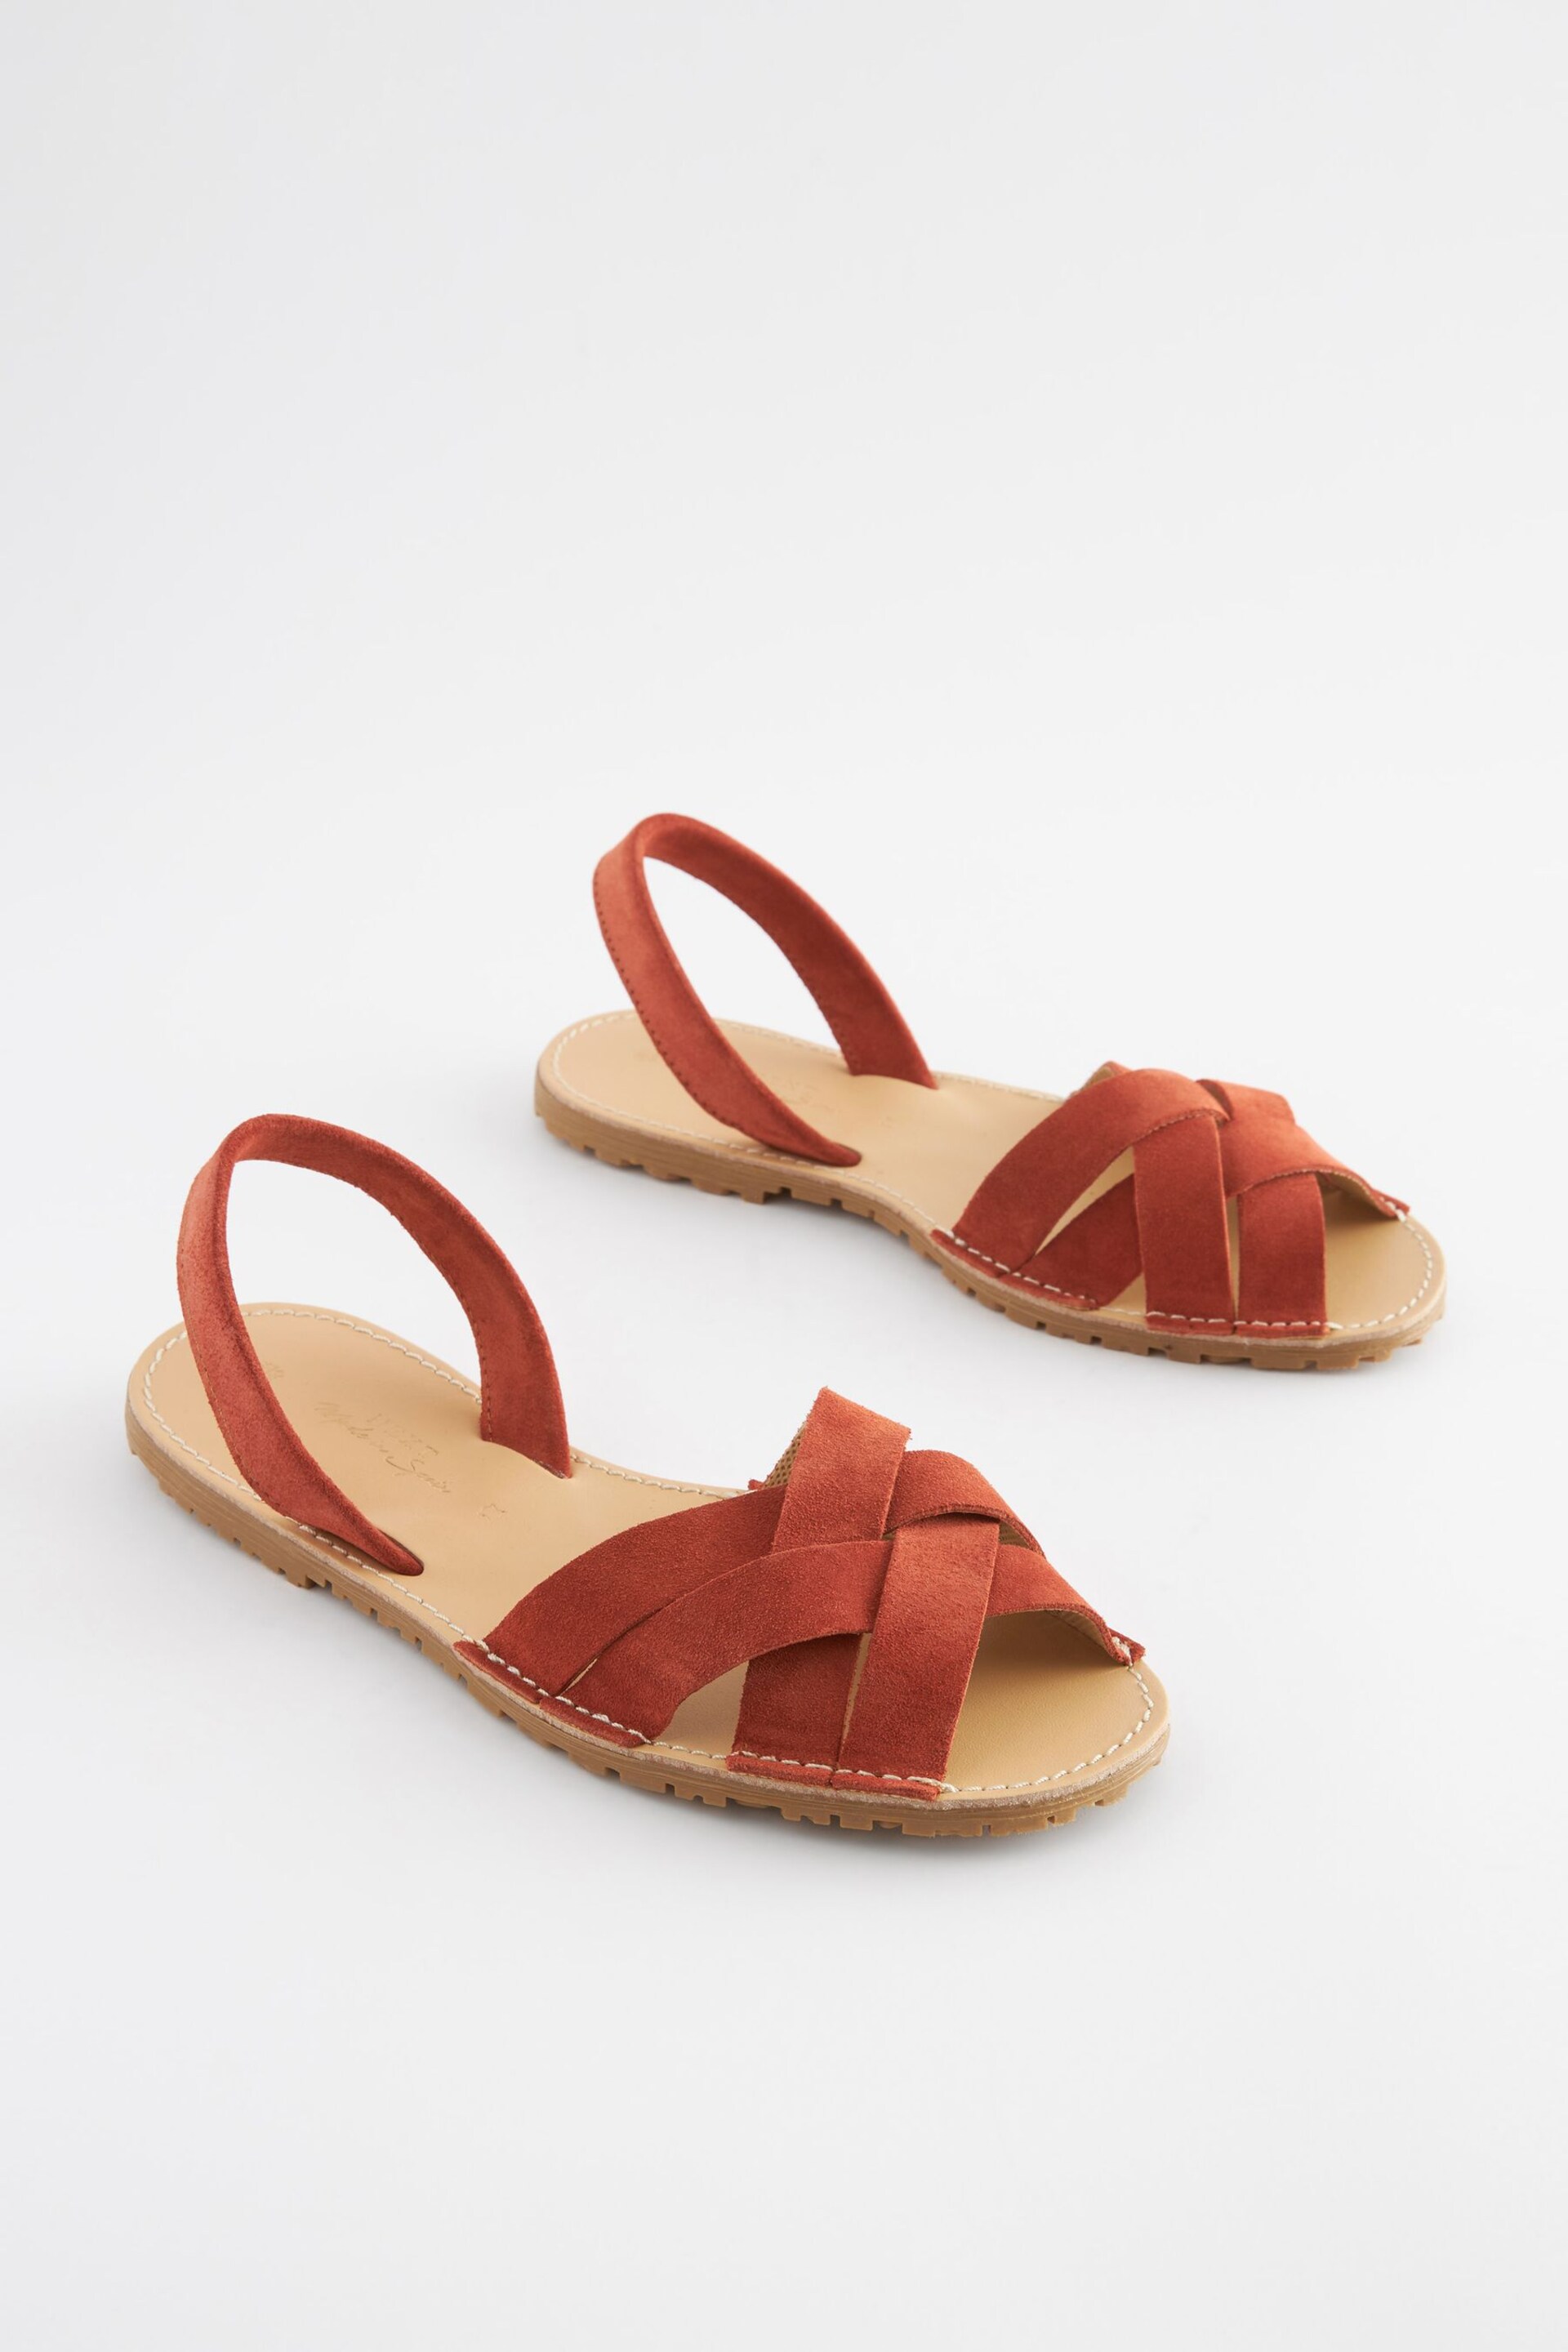 Rust Brown Suede Weave Sandals - Image 4 of 7